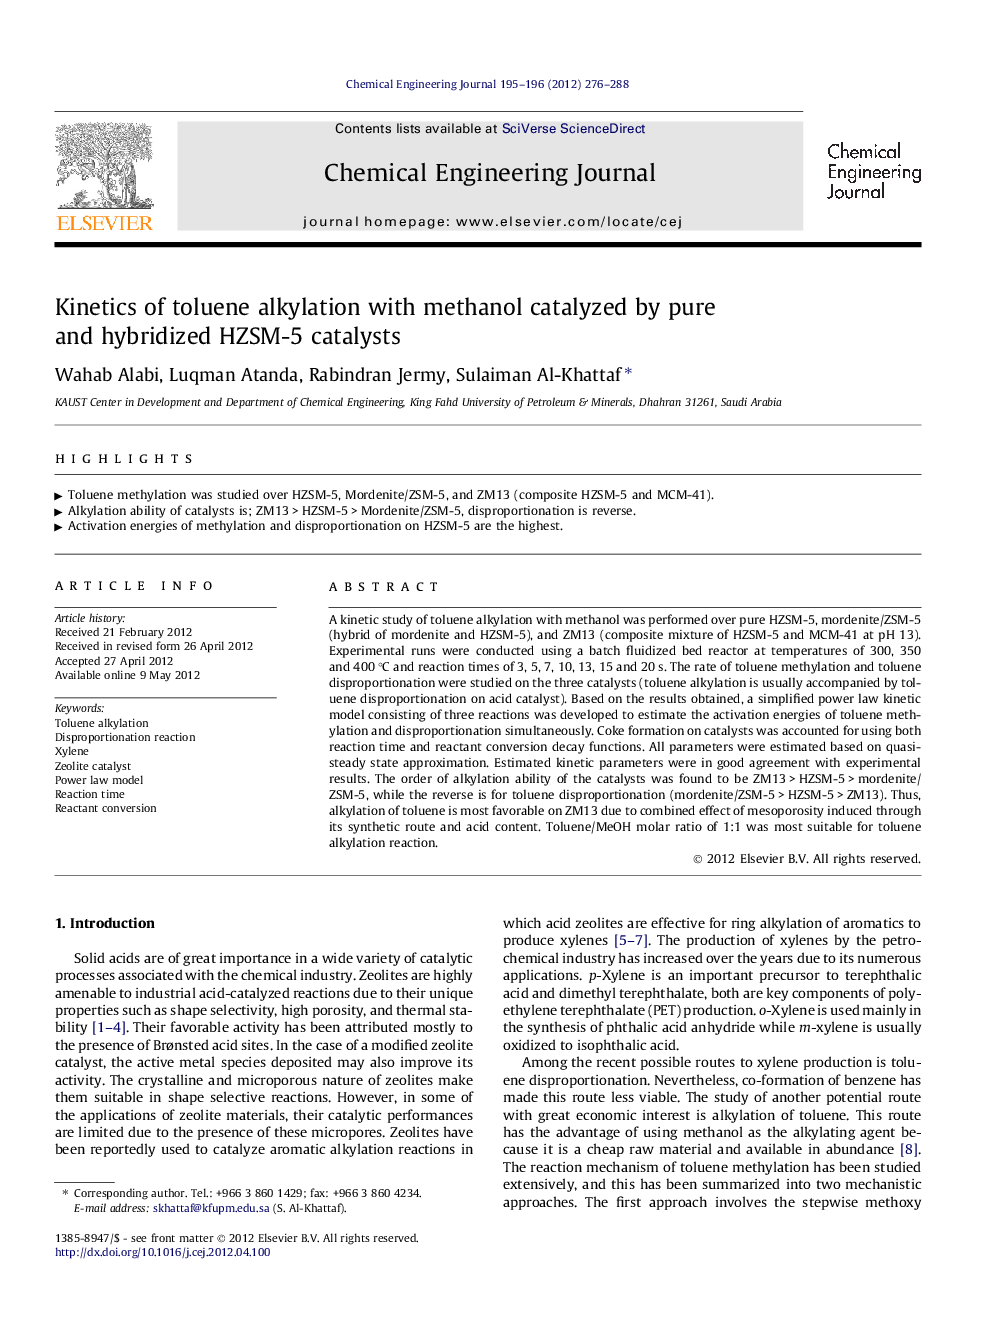 Kinetics of toluene alkylation with methanol catalyzed by pure and hybridized HZSM-5 catalysts